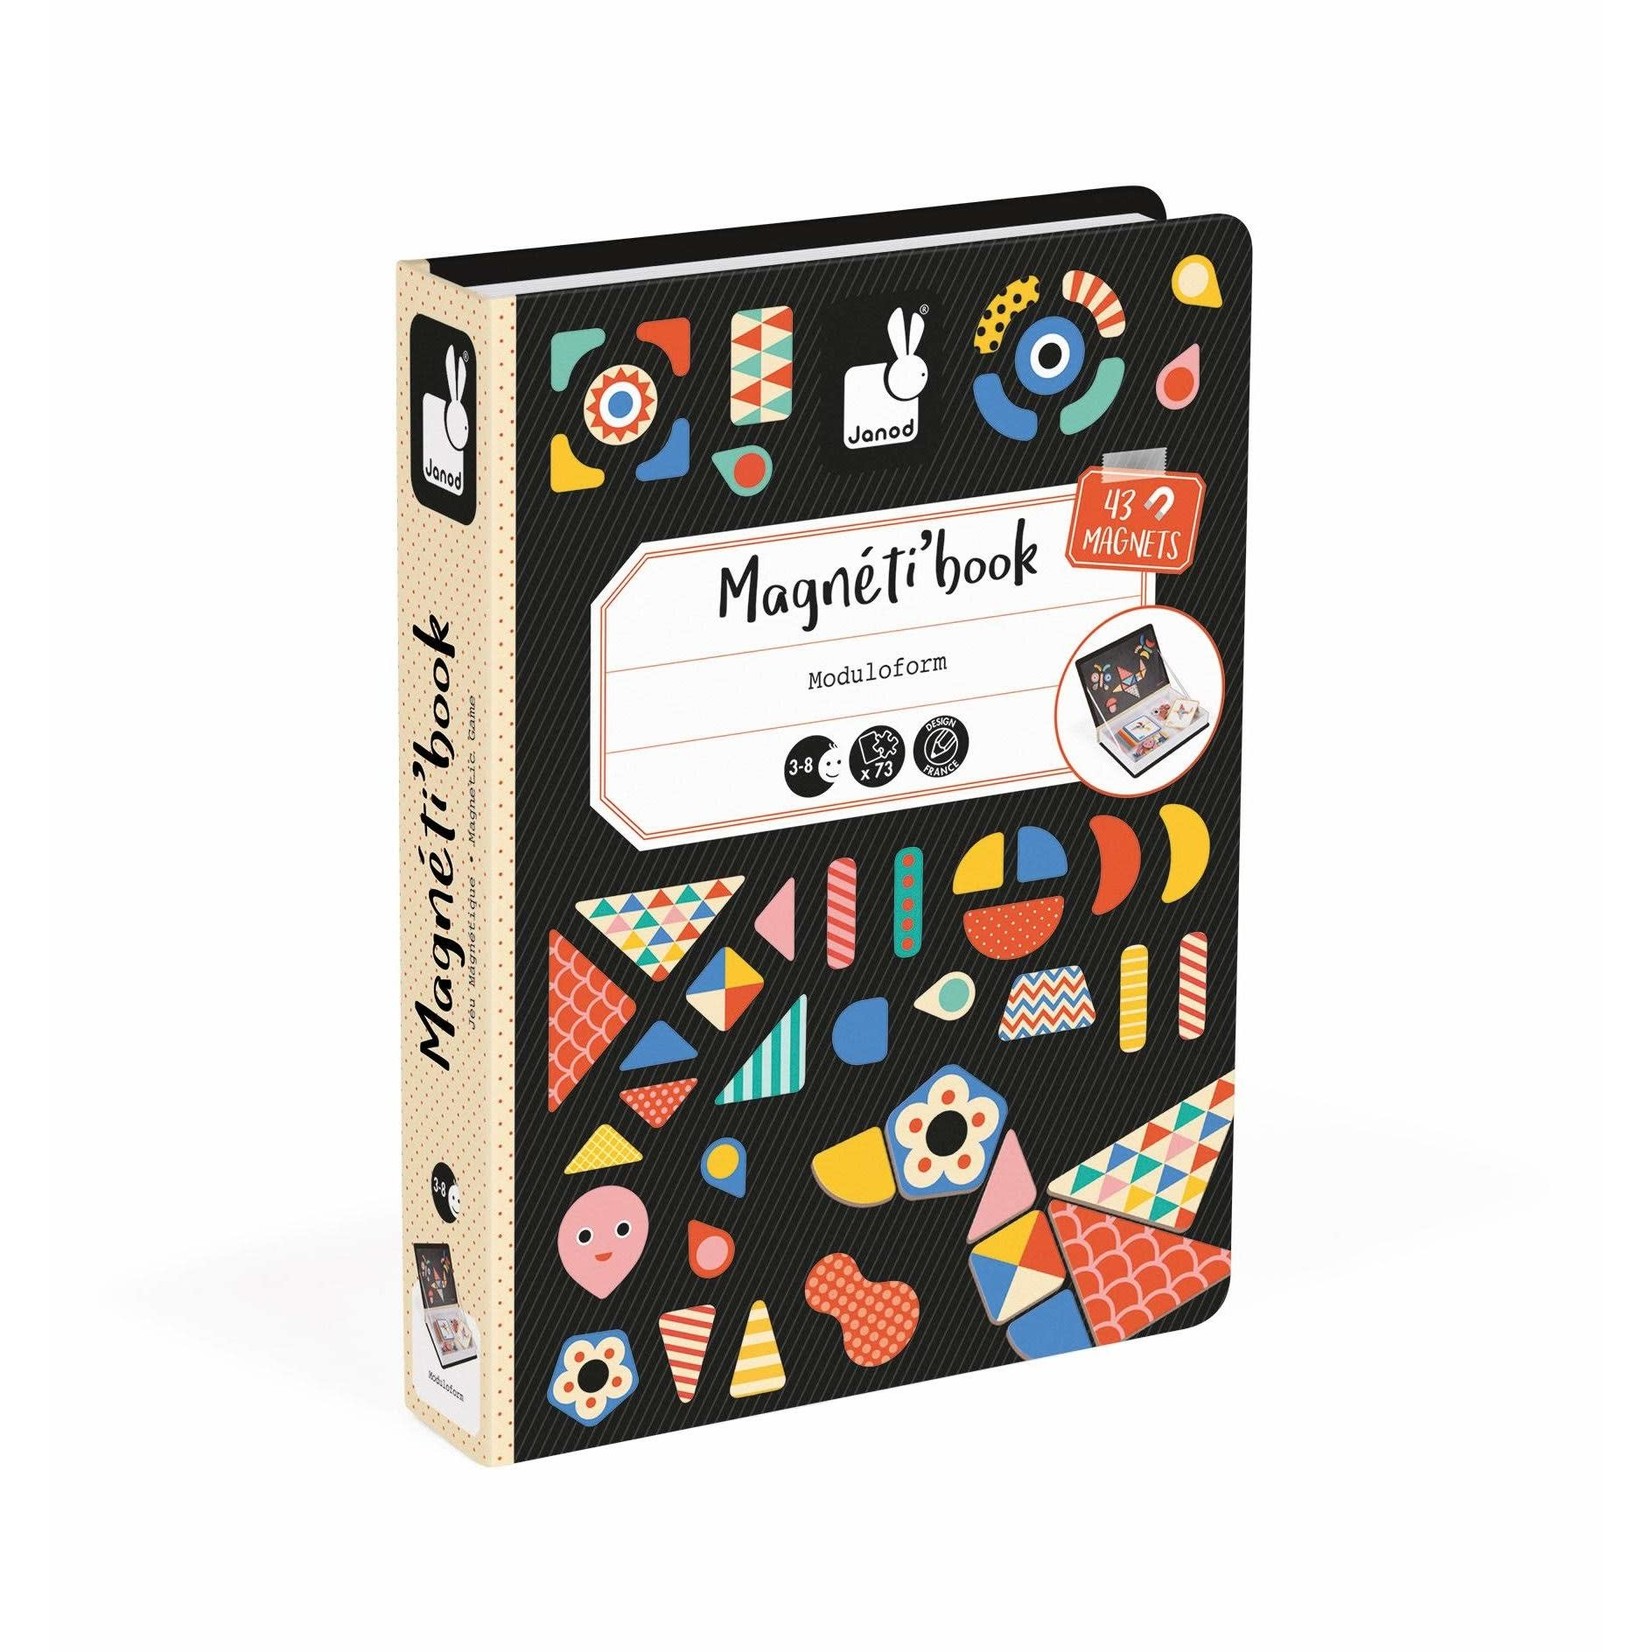 Janod Magnet Book | Moduloform